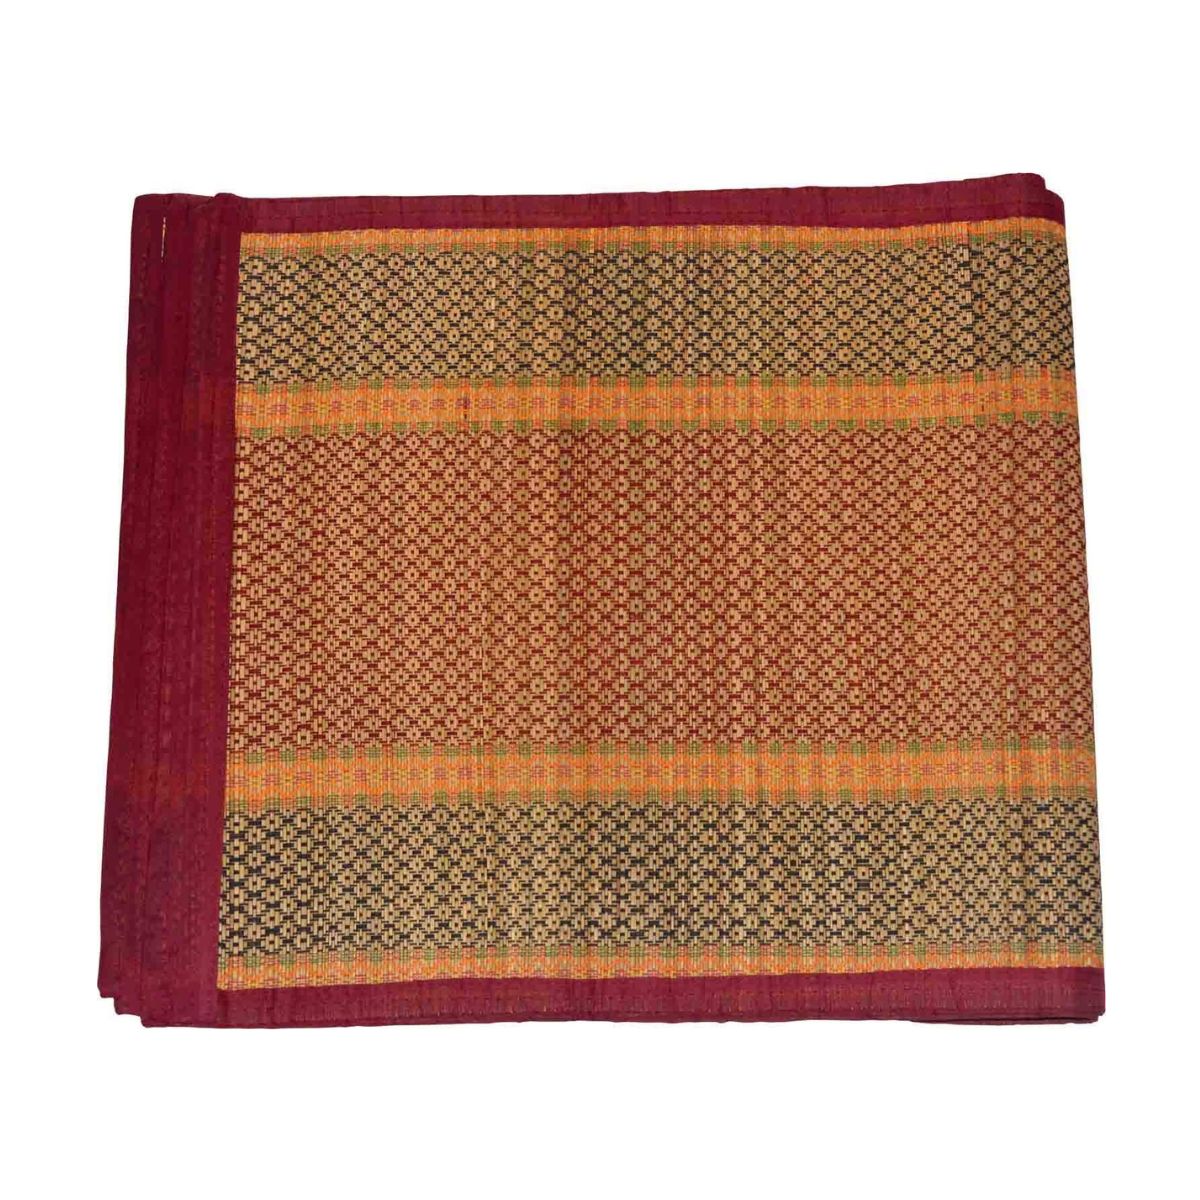 Chatai  Floor Mat Foldable handwoven Organic made of Madurkathi Grass for Sleeping, Sitting, yoga - T3-22